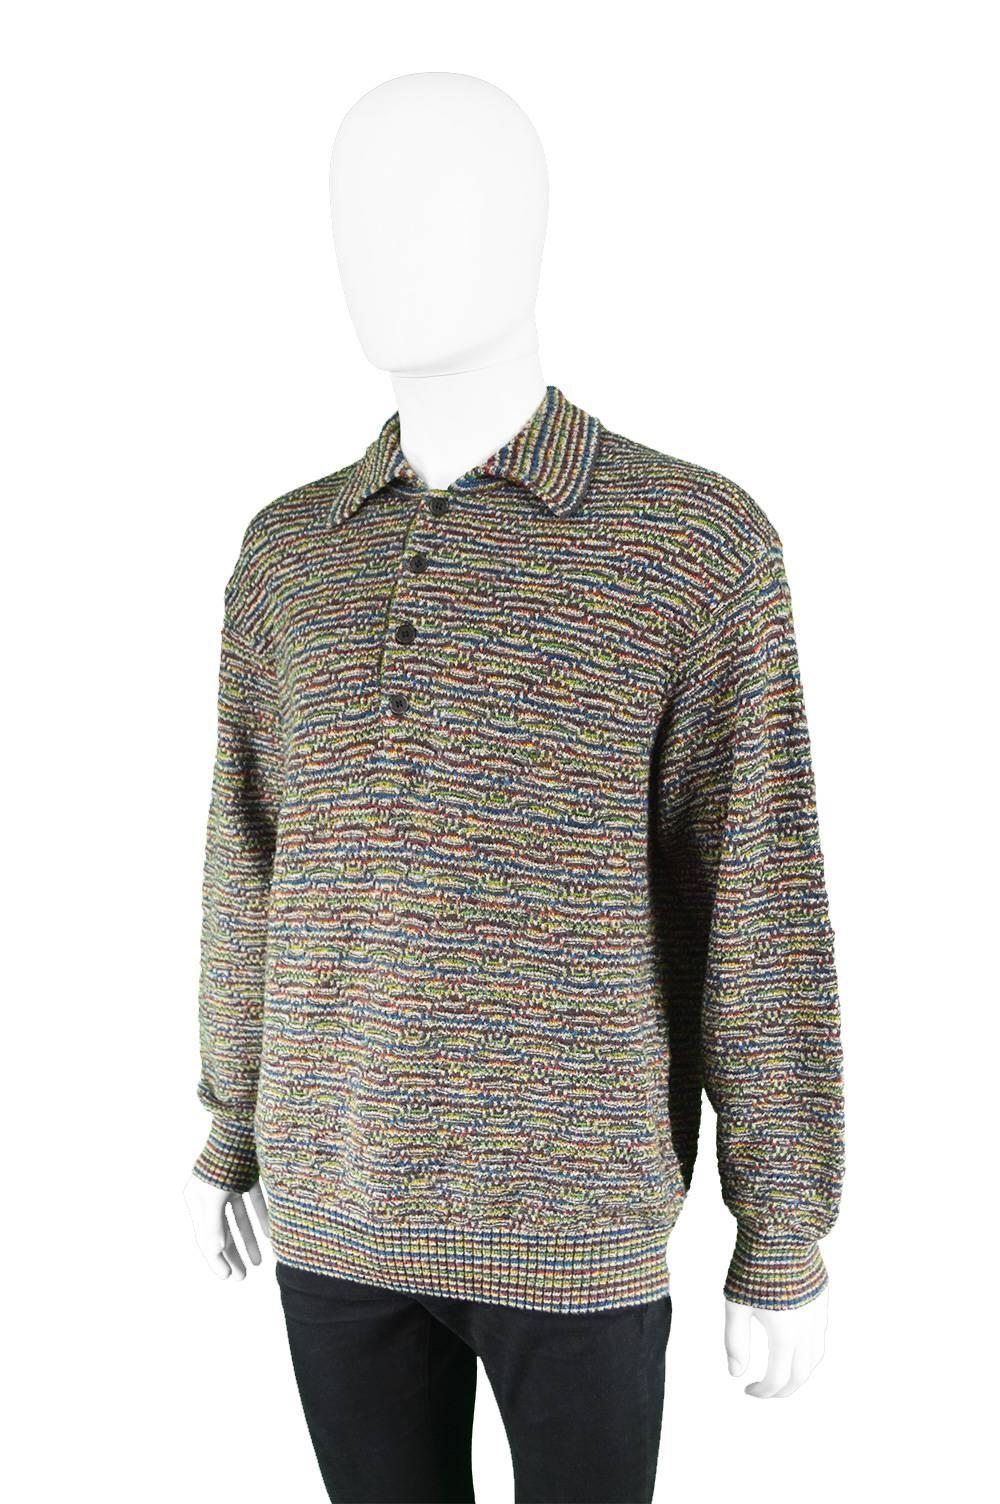 Missoni Men's Vintage Textured Wool, Acrylic & Alpaca Knit Sweater, 1990s For Sale 1